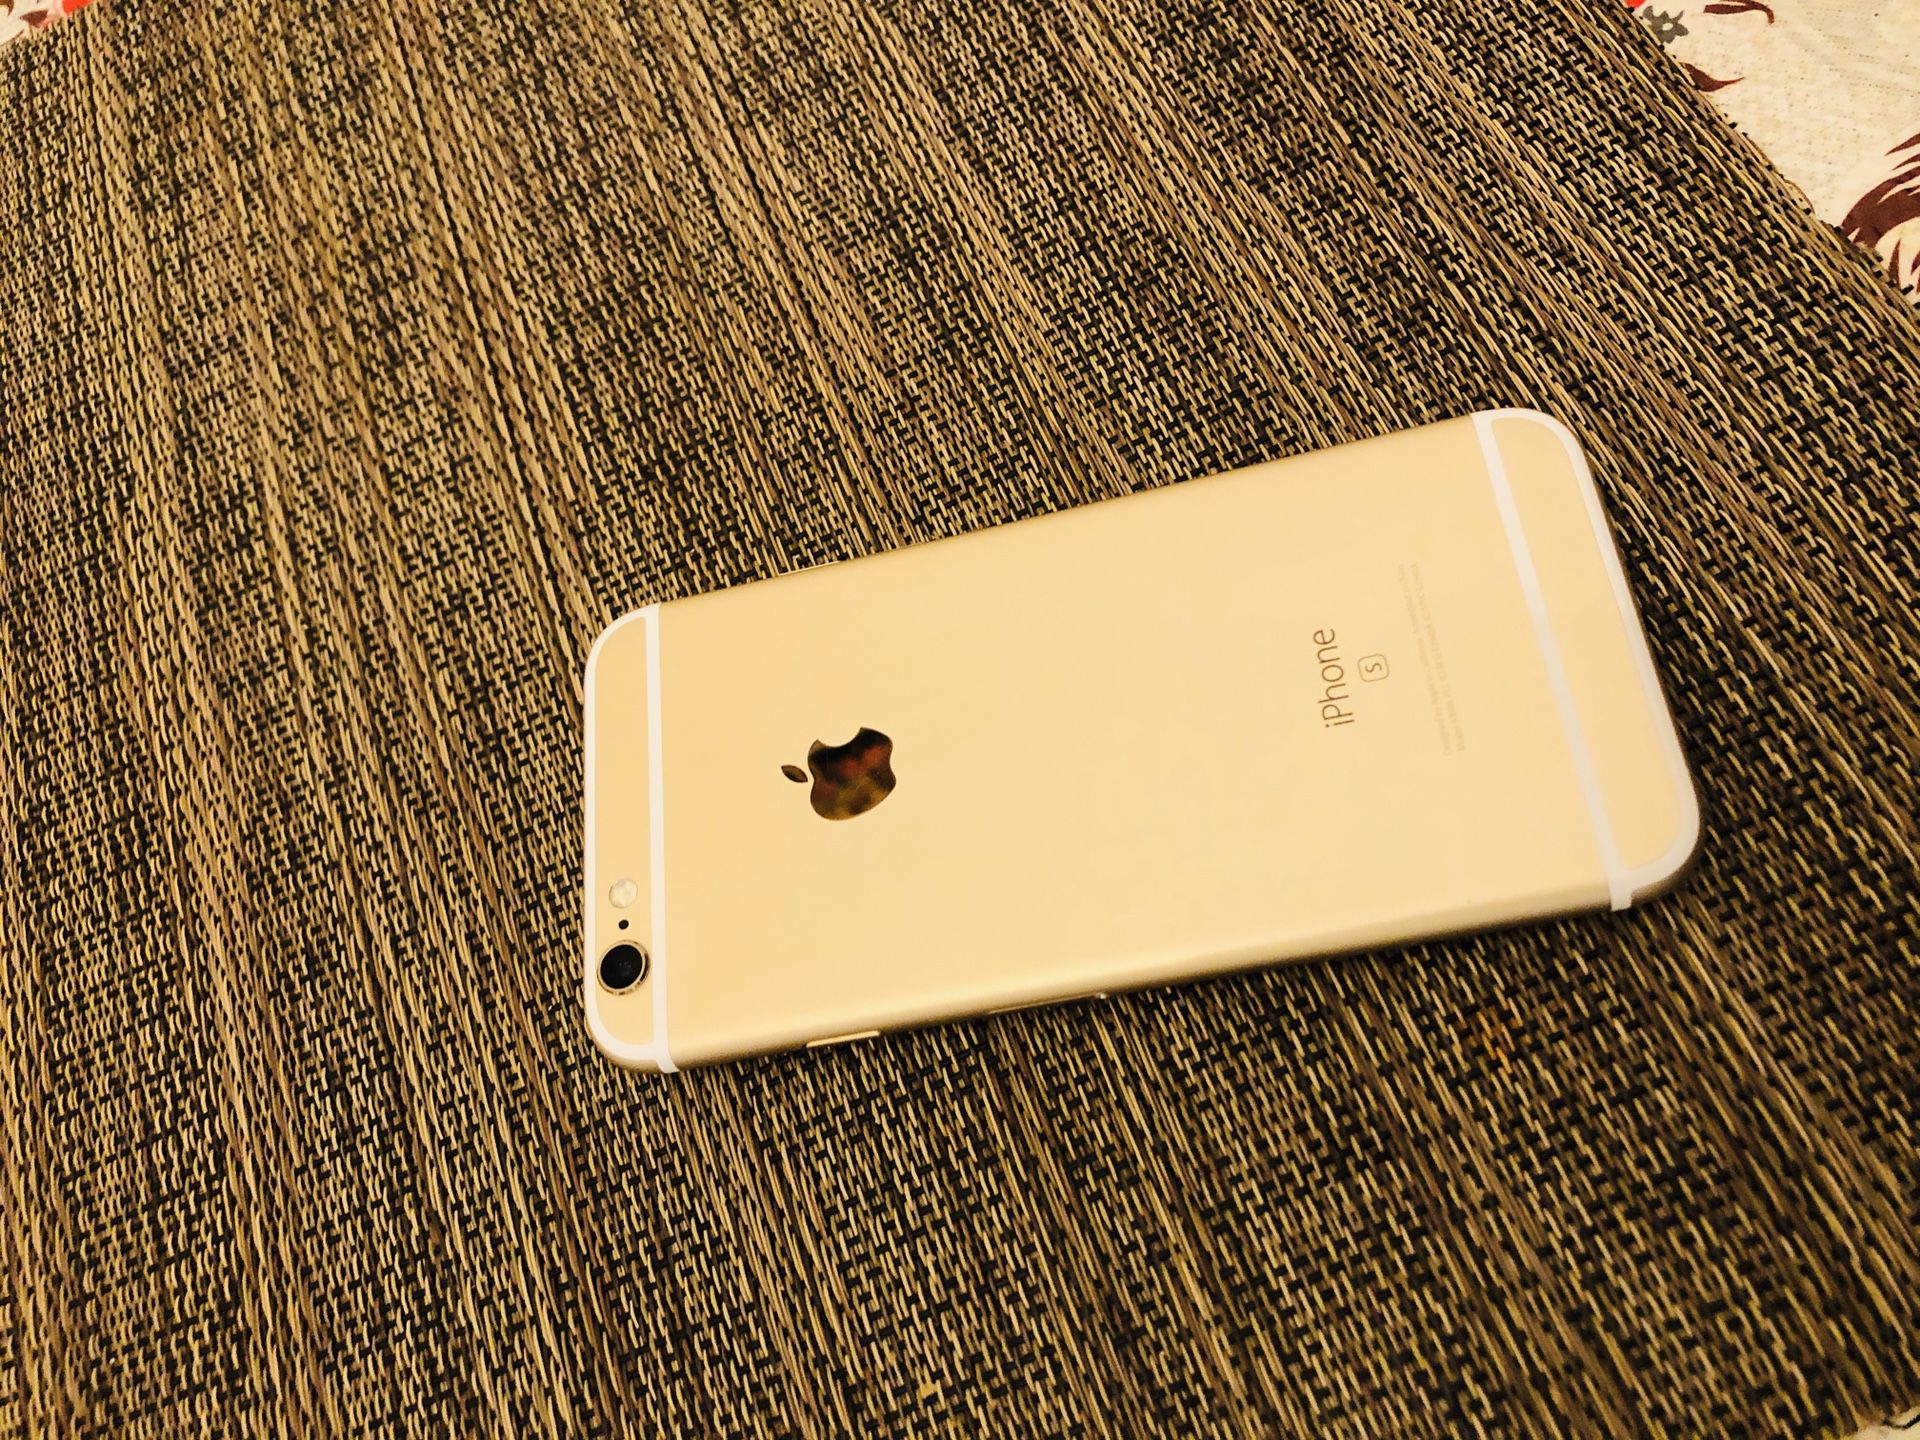 Gold Apple iPhone 6S -16GB (GSM Unlocked) SmartPhone(Like New)